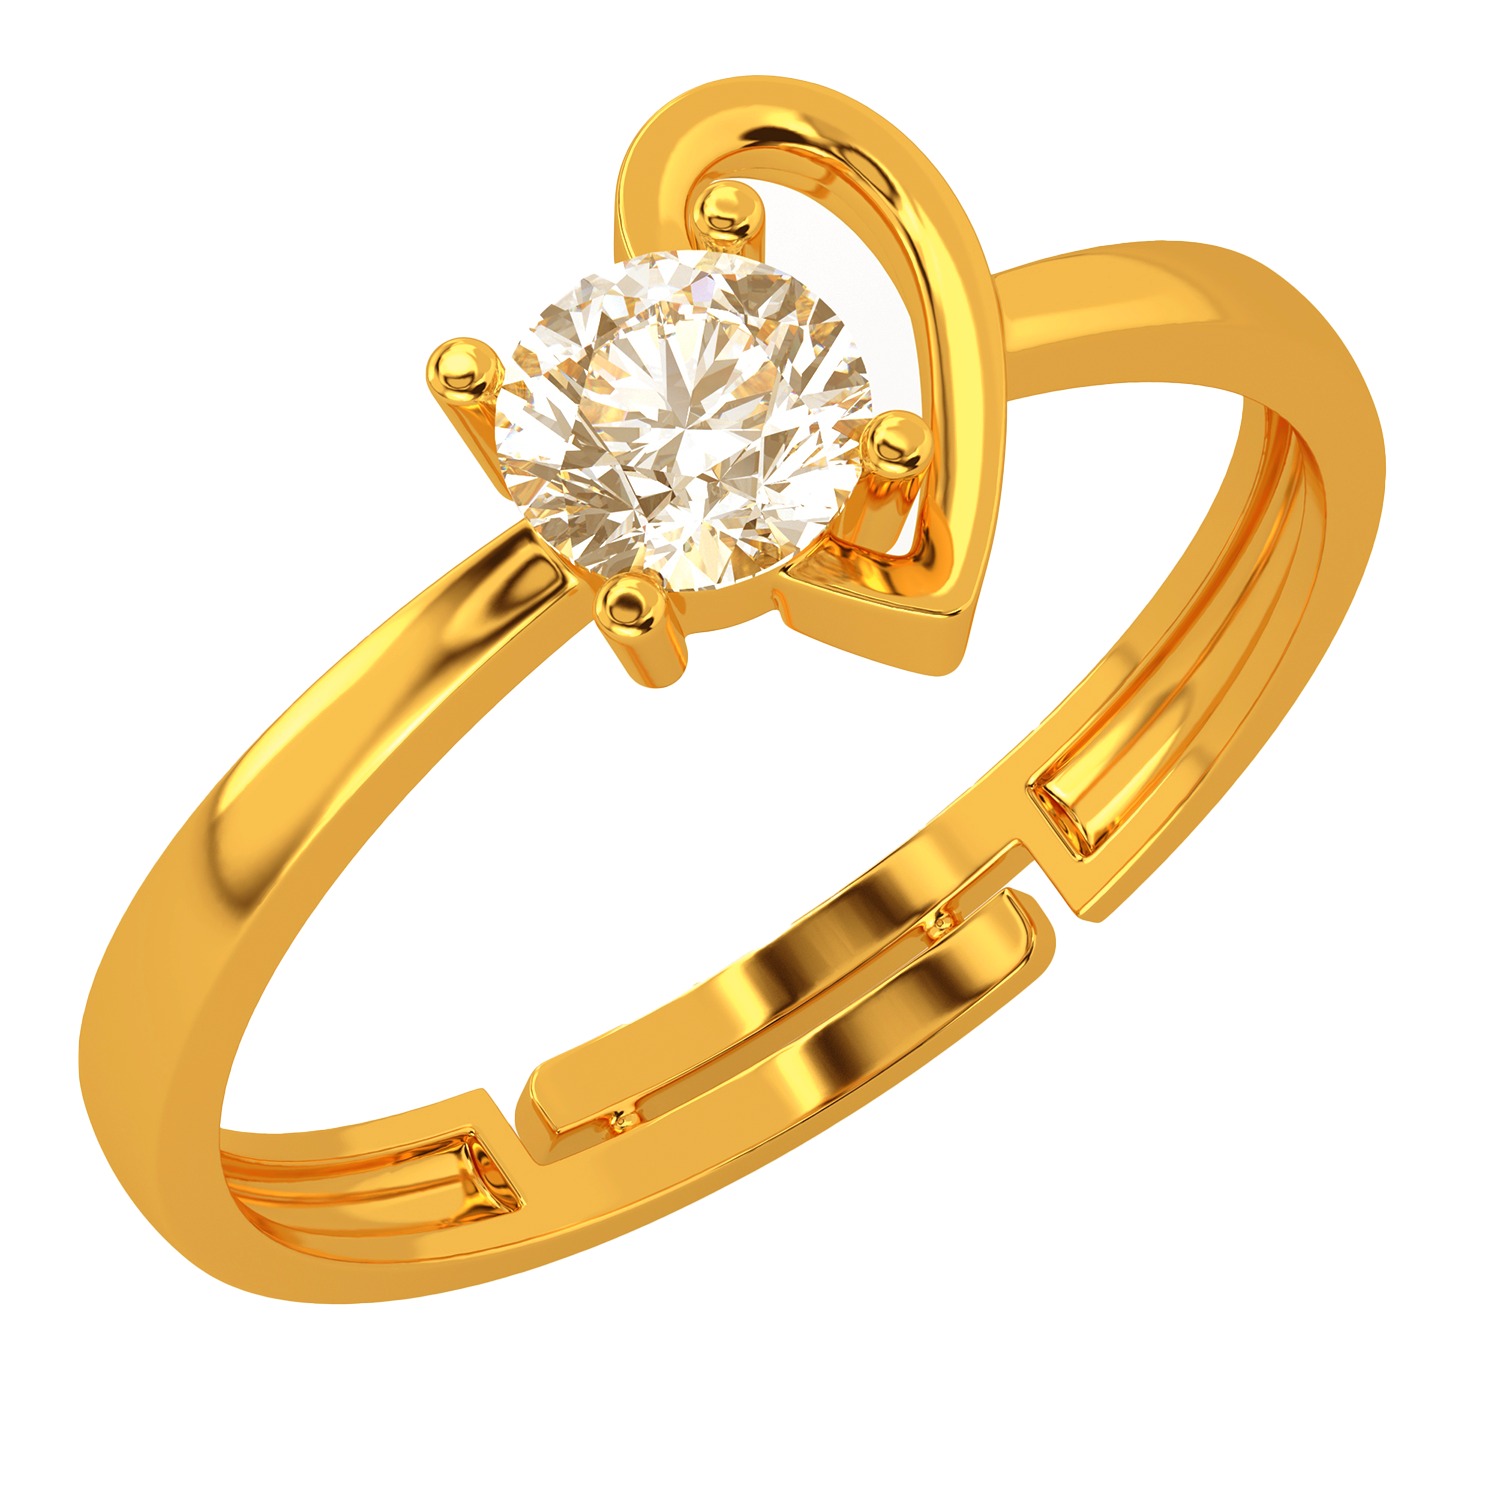 Minimalist Diamond Ring in Yellow Gold | KLENOTA